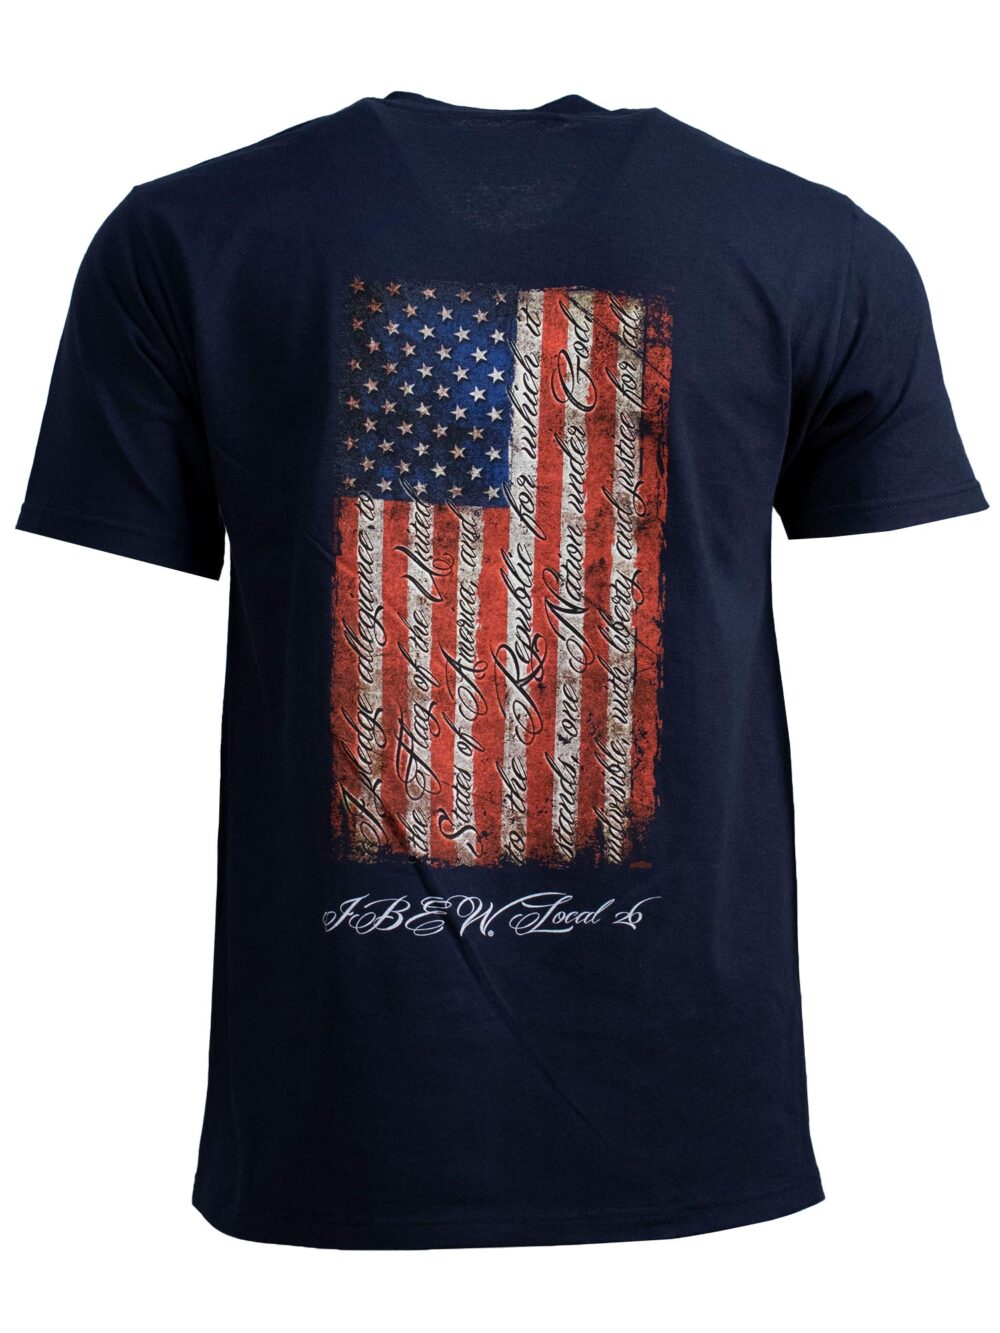 Short Sleeve Navy Pocket Shirt With American Flag - Backside